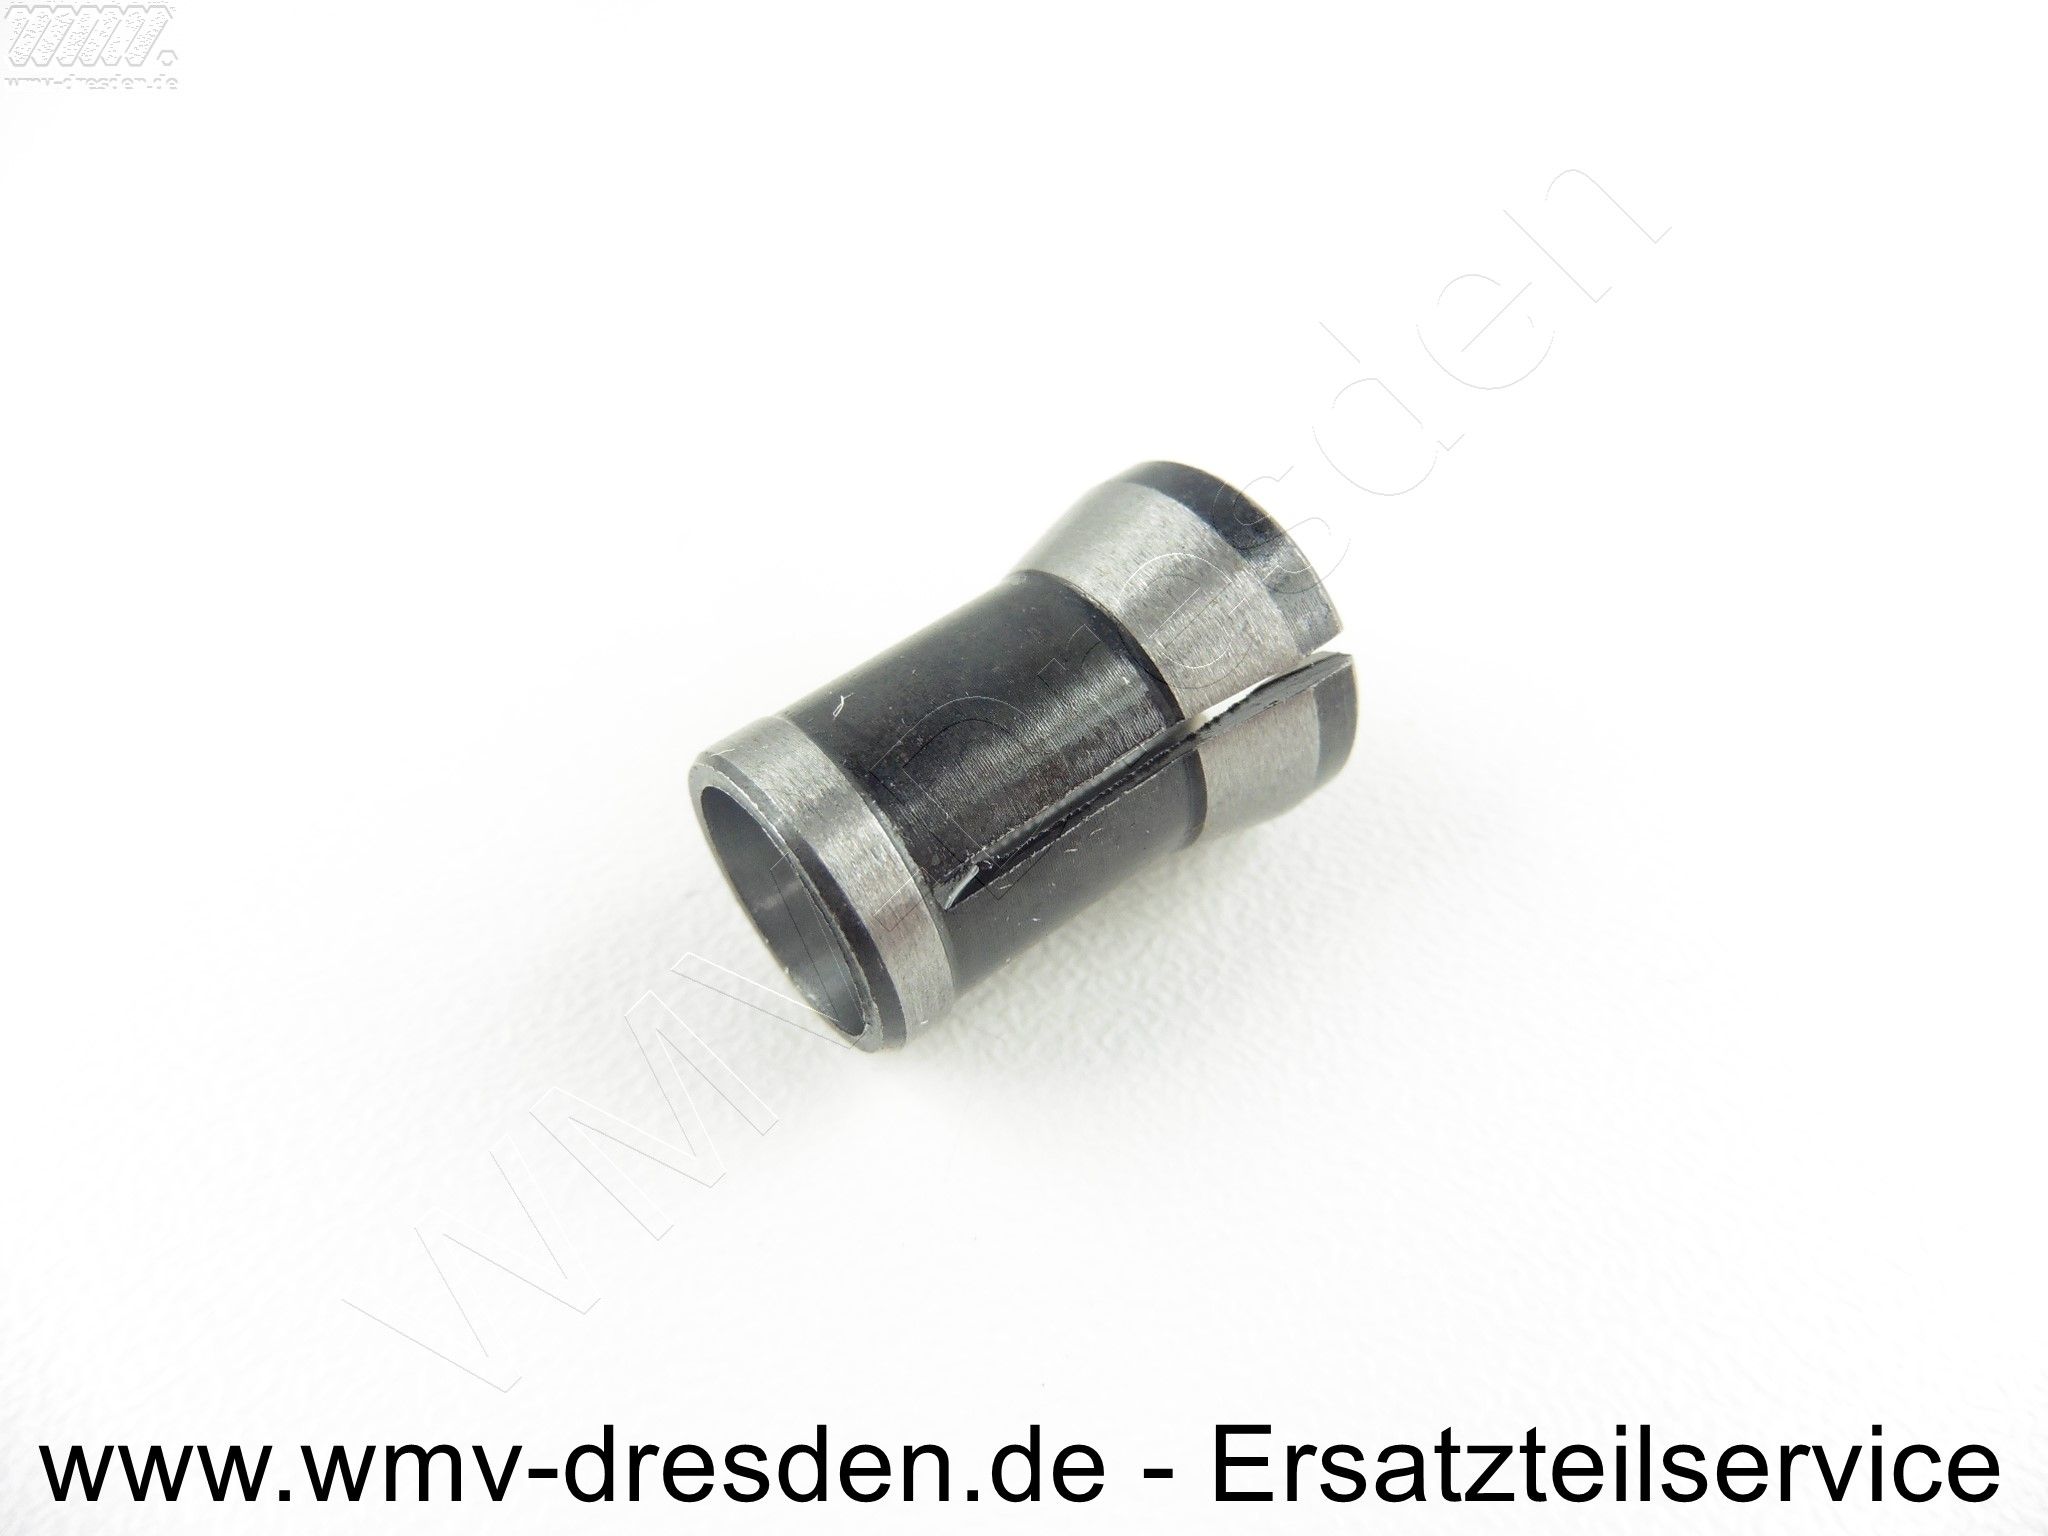 Artikel 2608570049-B17 Hersteller: Bosch-Skil-Dremel 